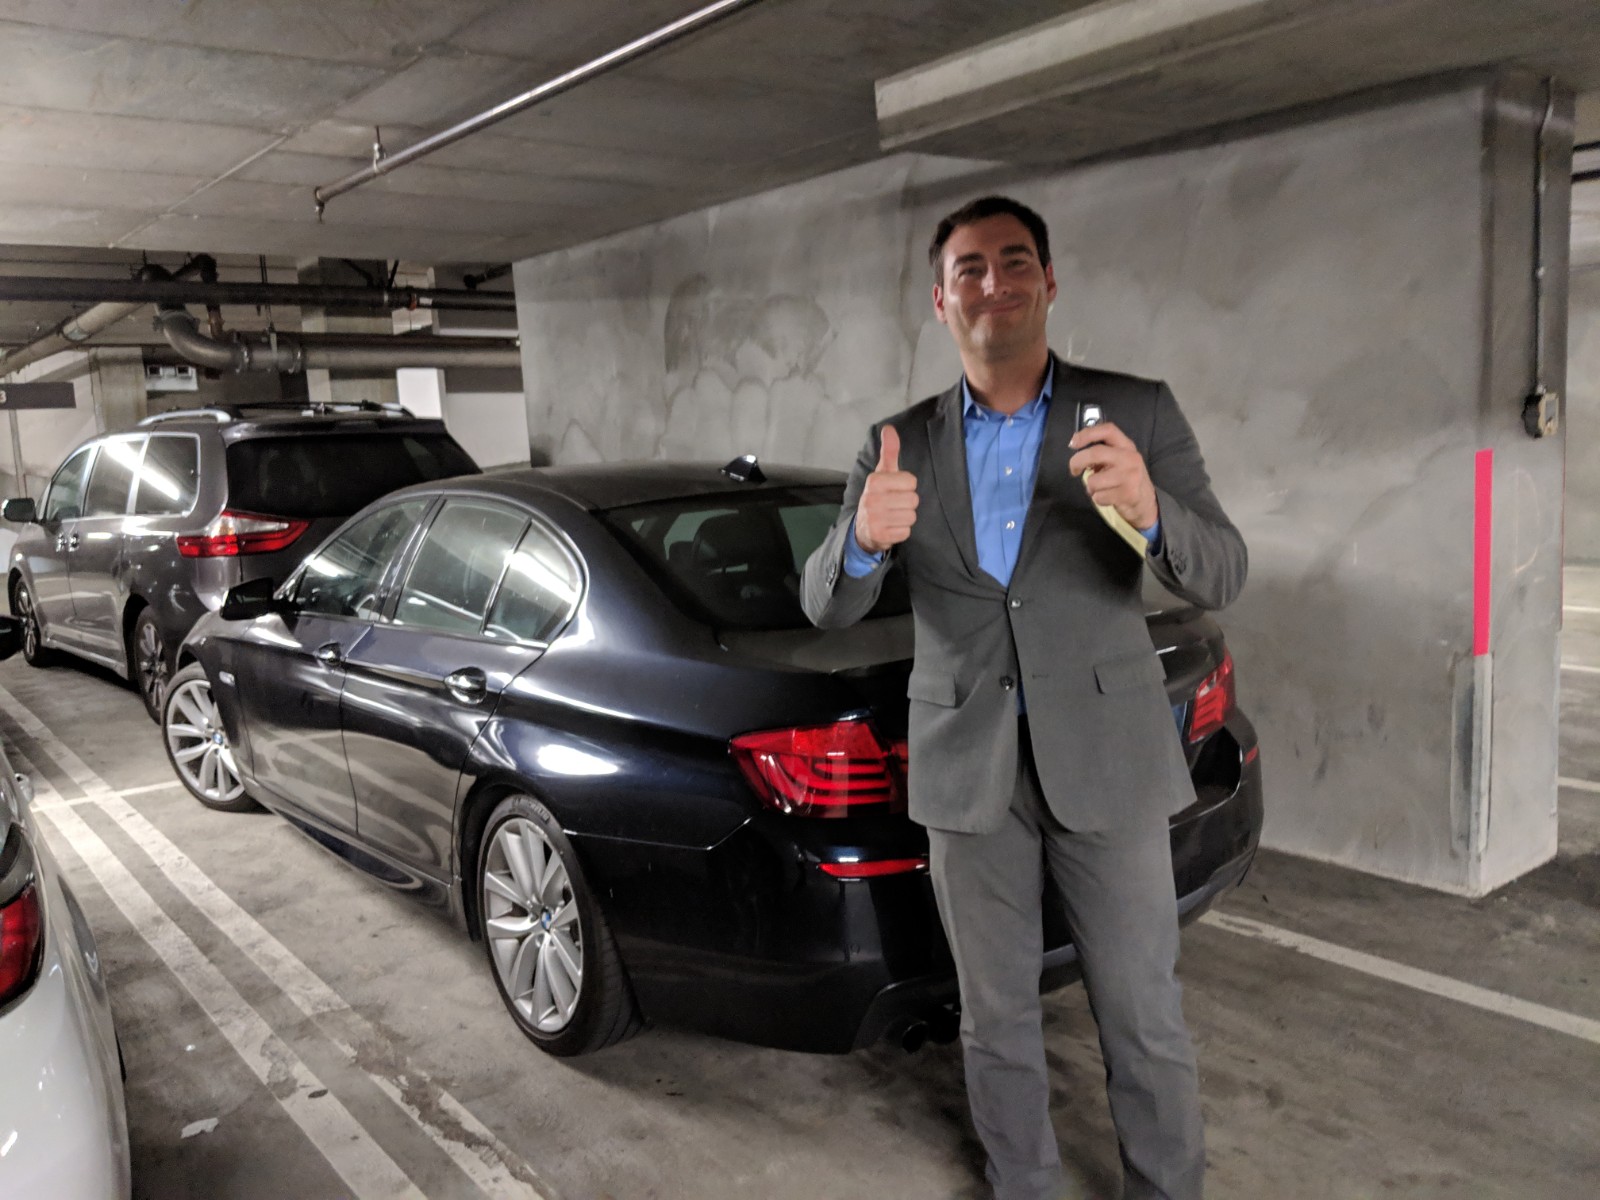 2012 BMW 535i proximity key Hollywood CA